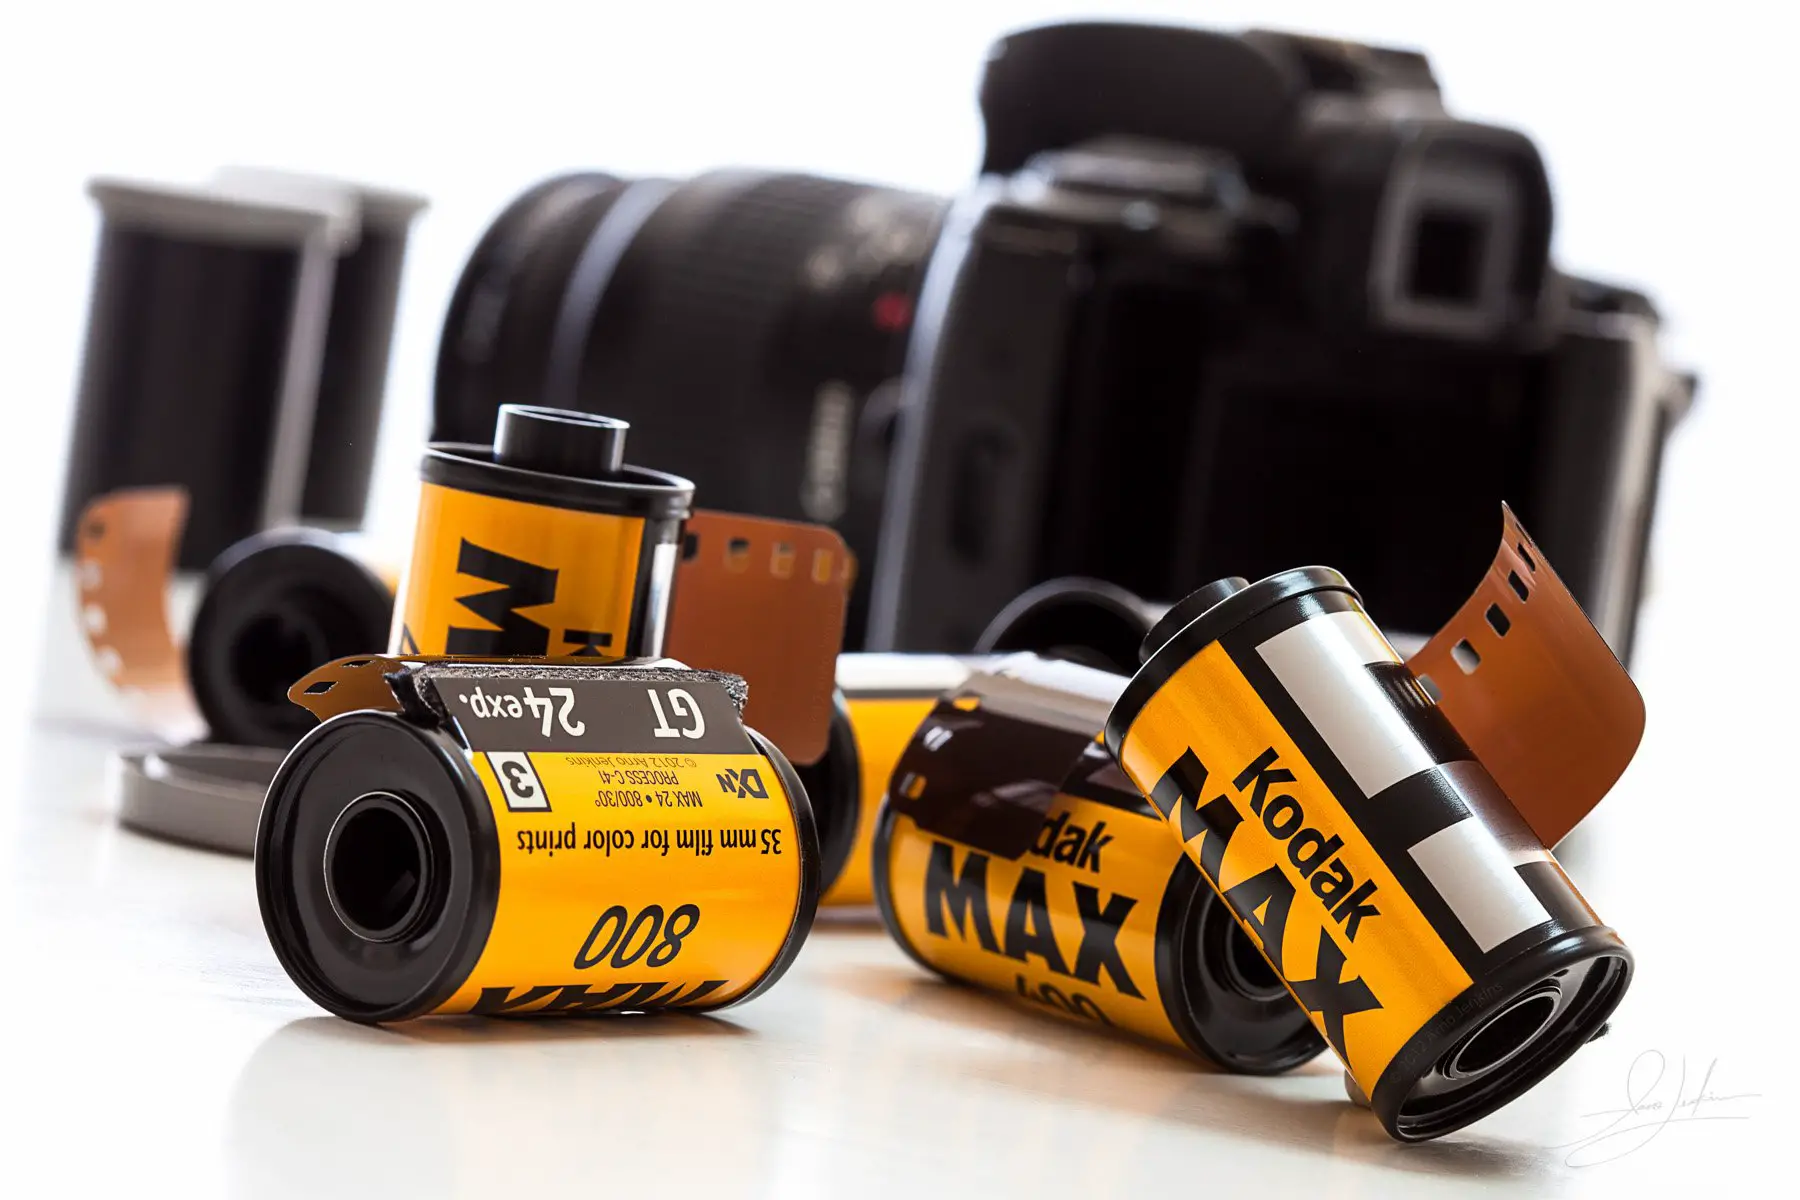 Eastman Kodak files for bankruptcy